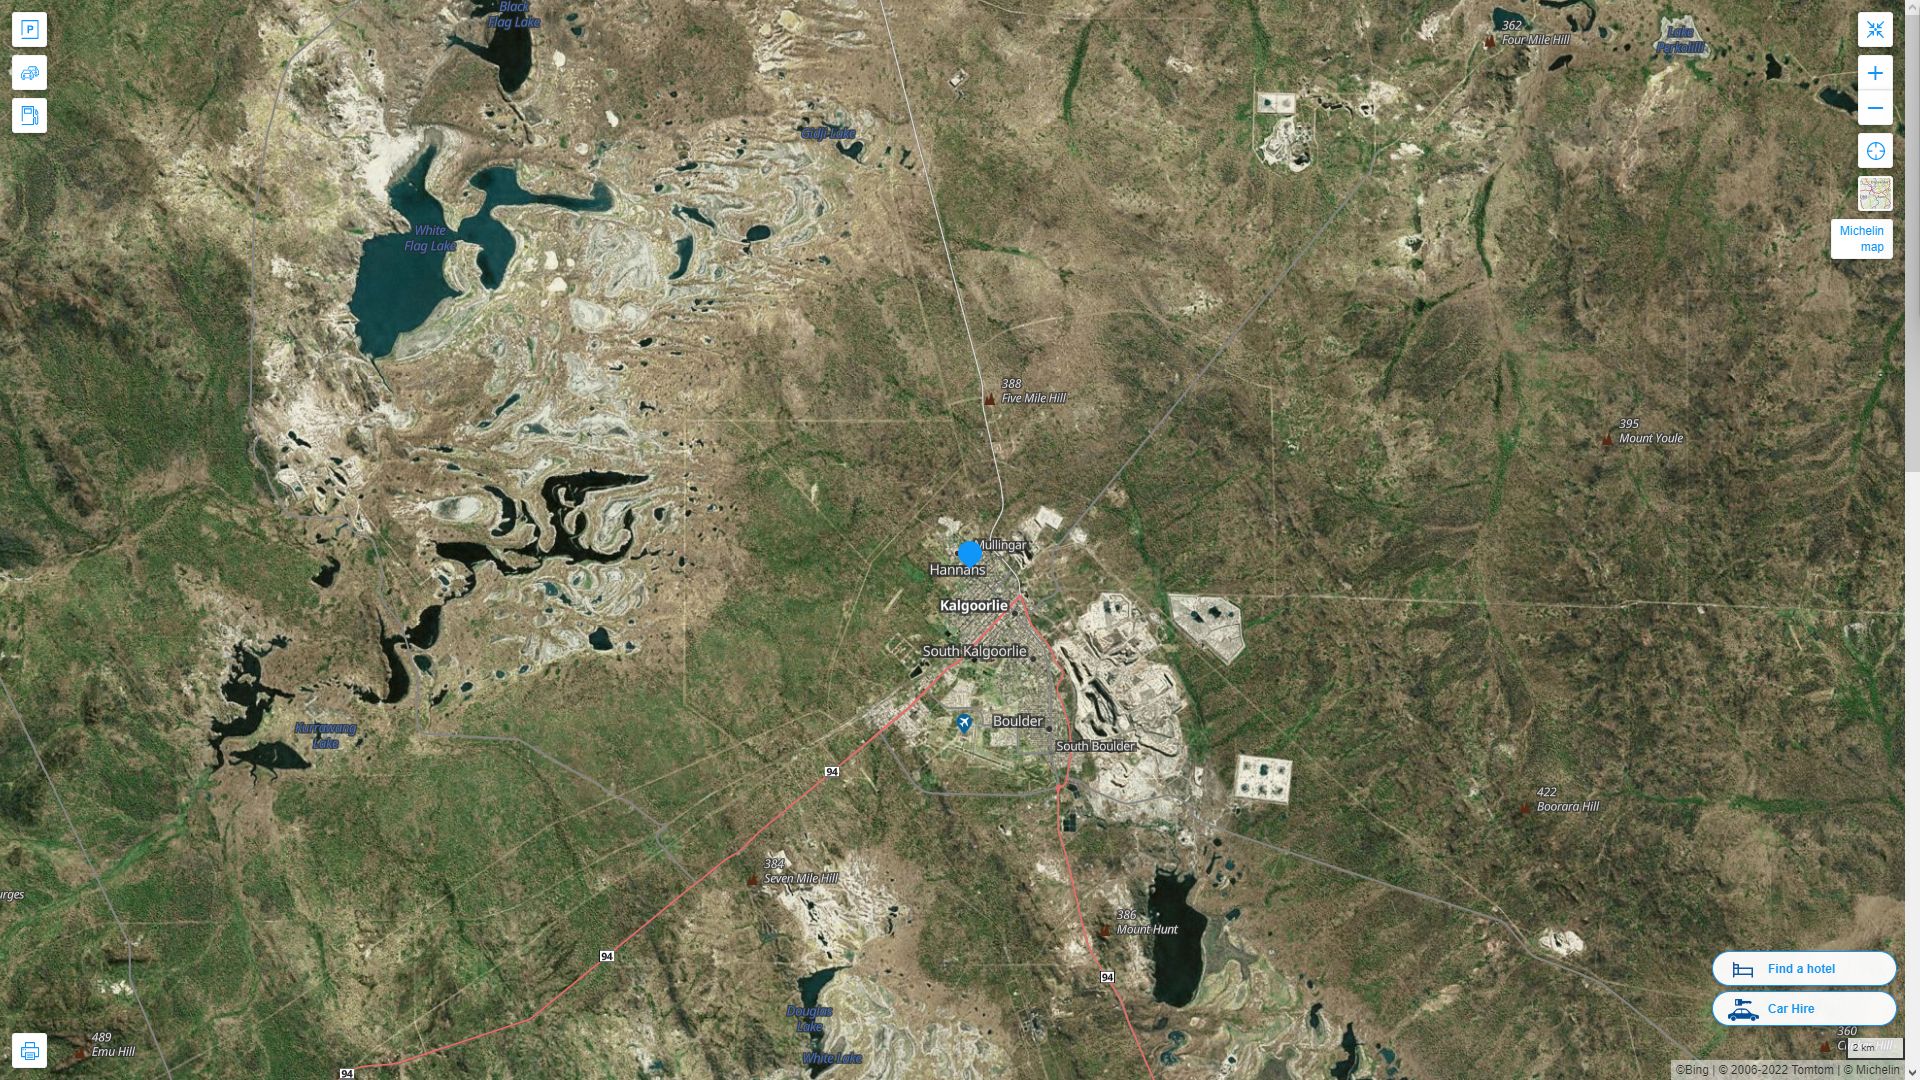 Kalgoorlie Highway and Road Map with Satellite View